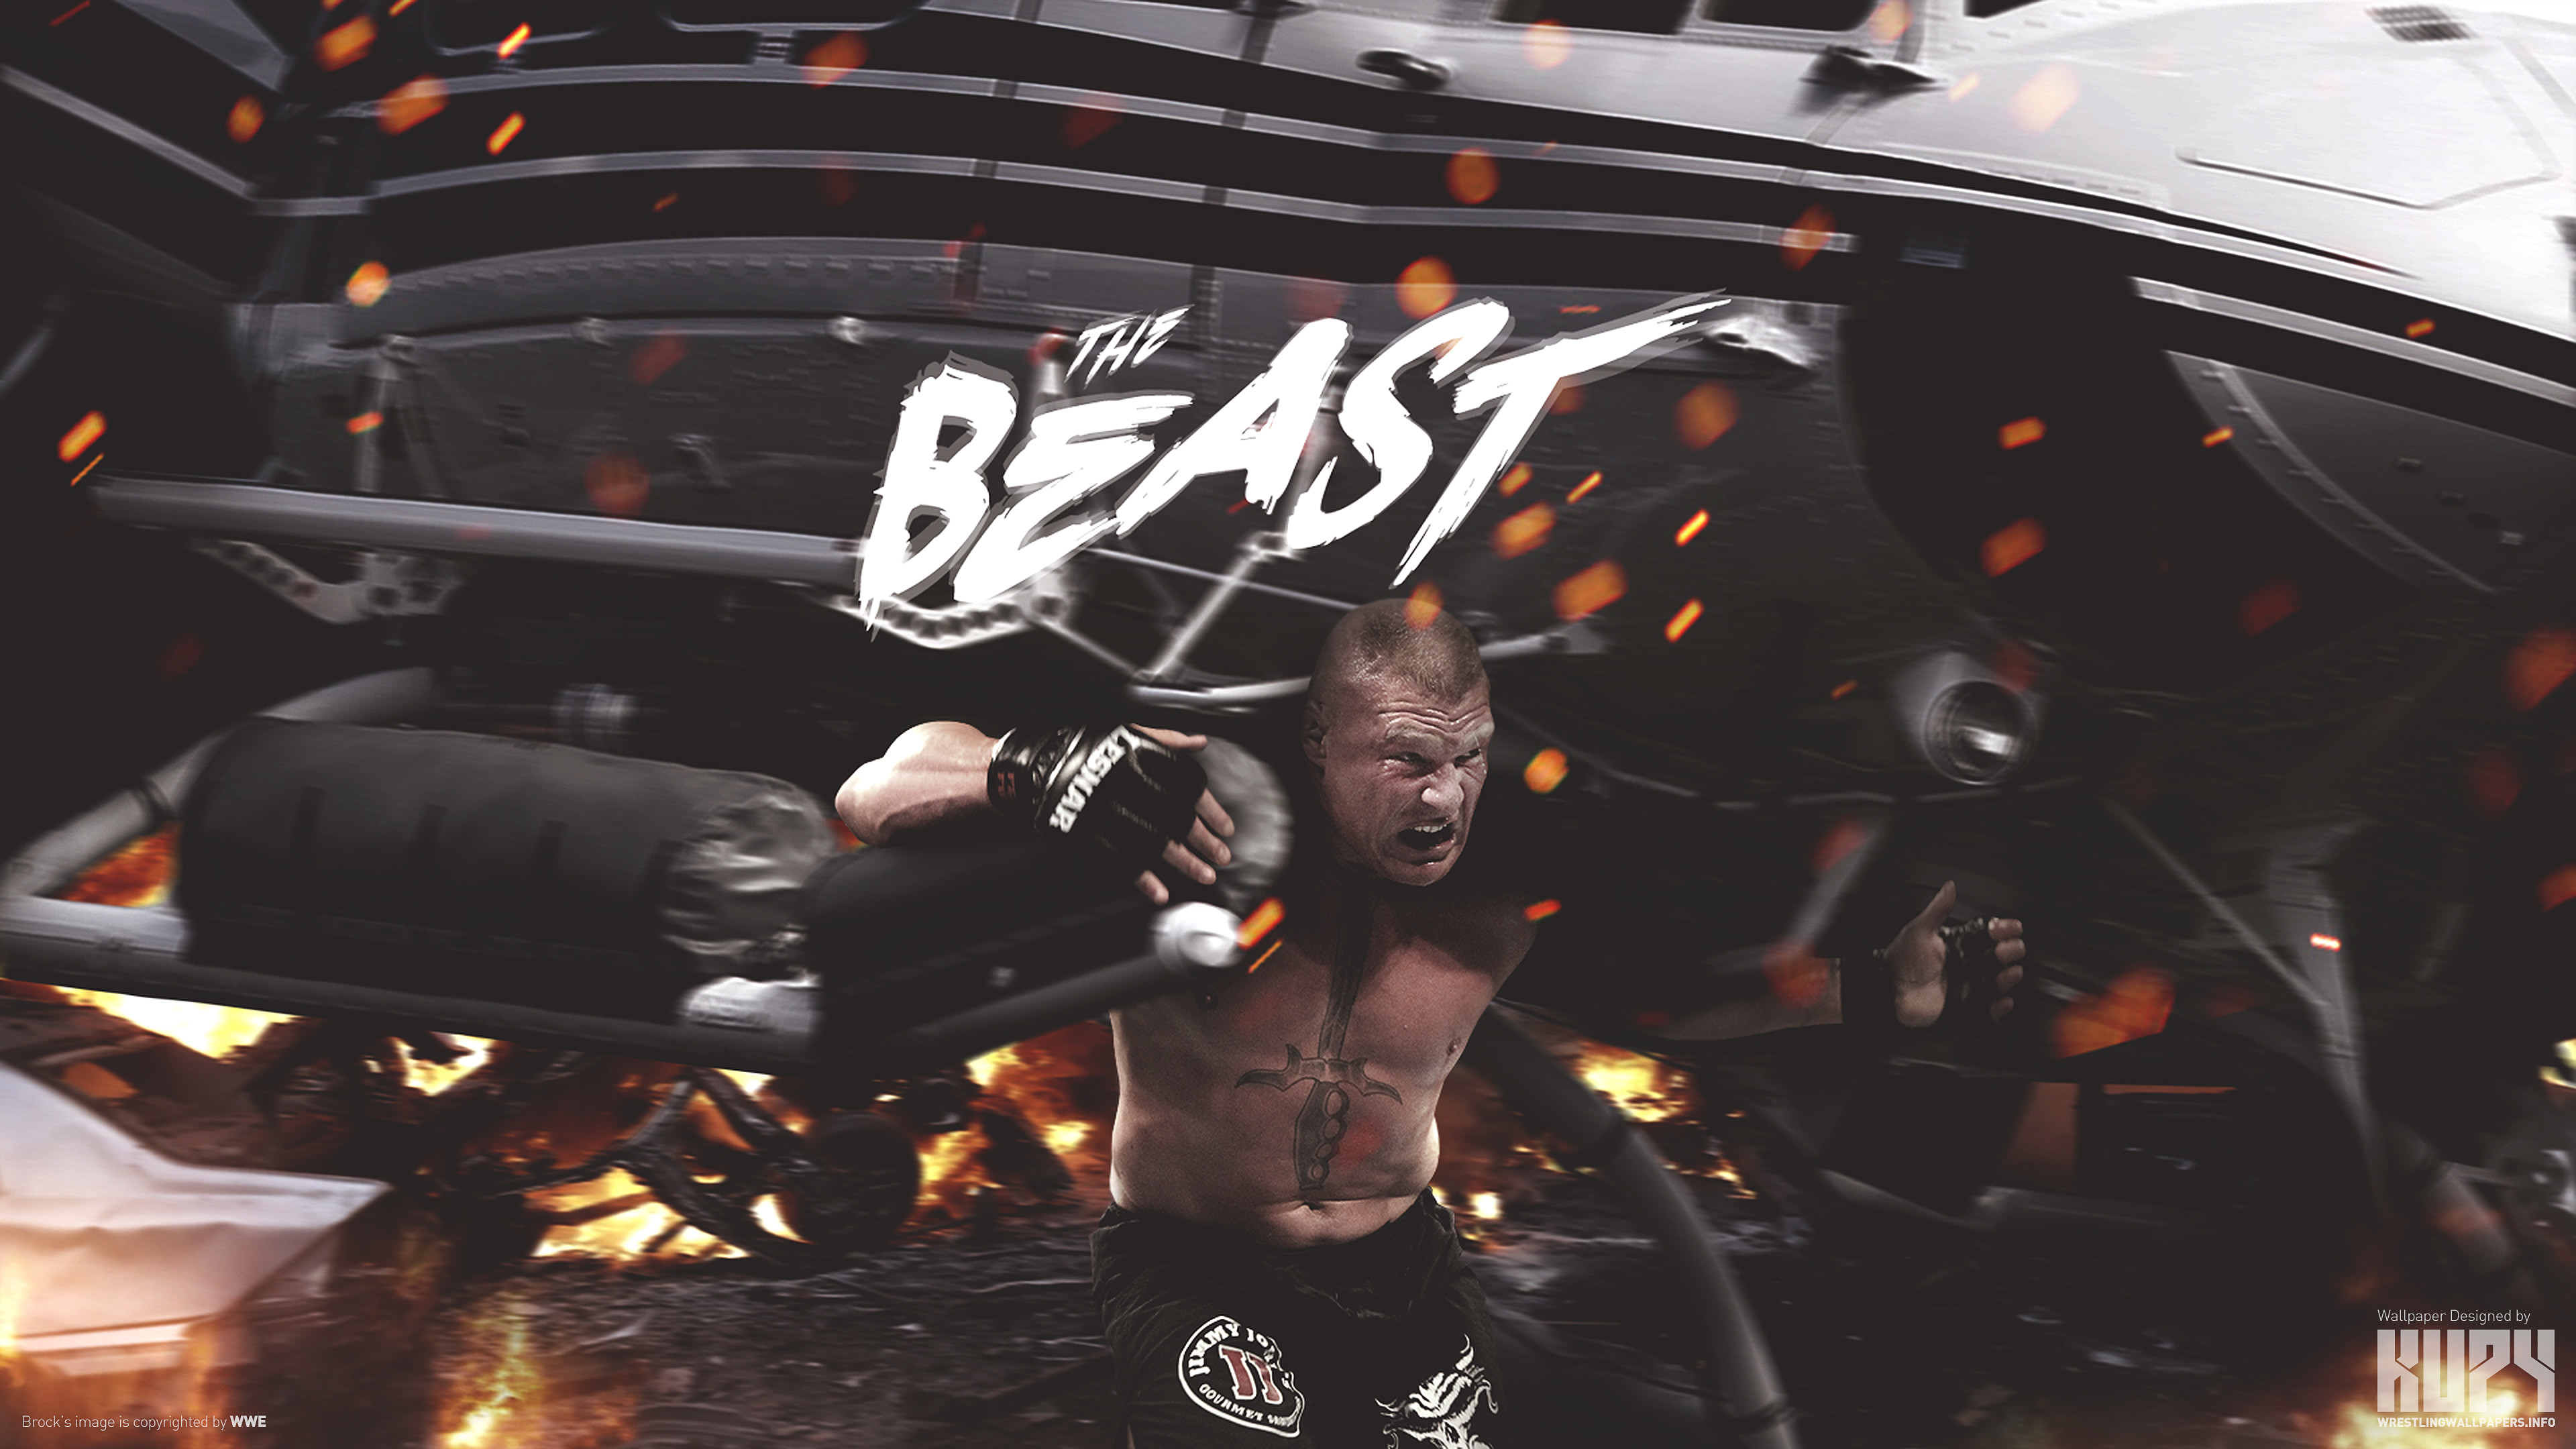 The Beast” Brock Lesnar wallpaper